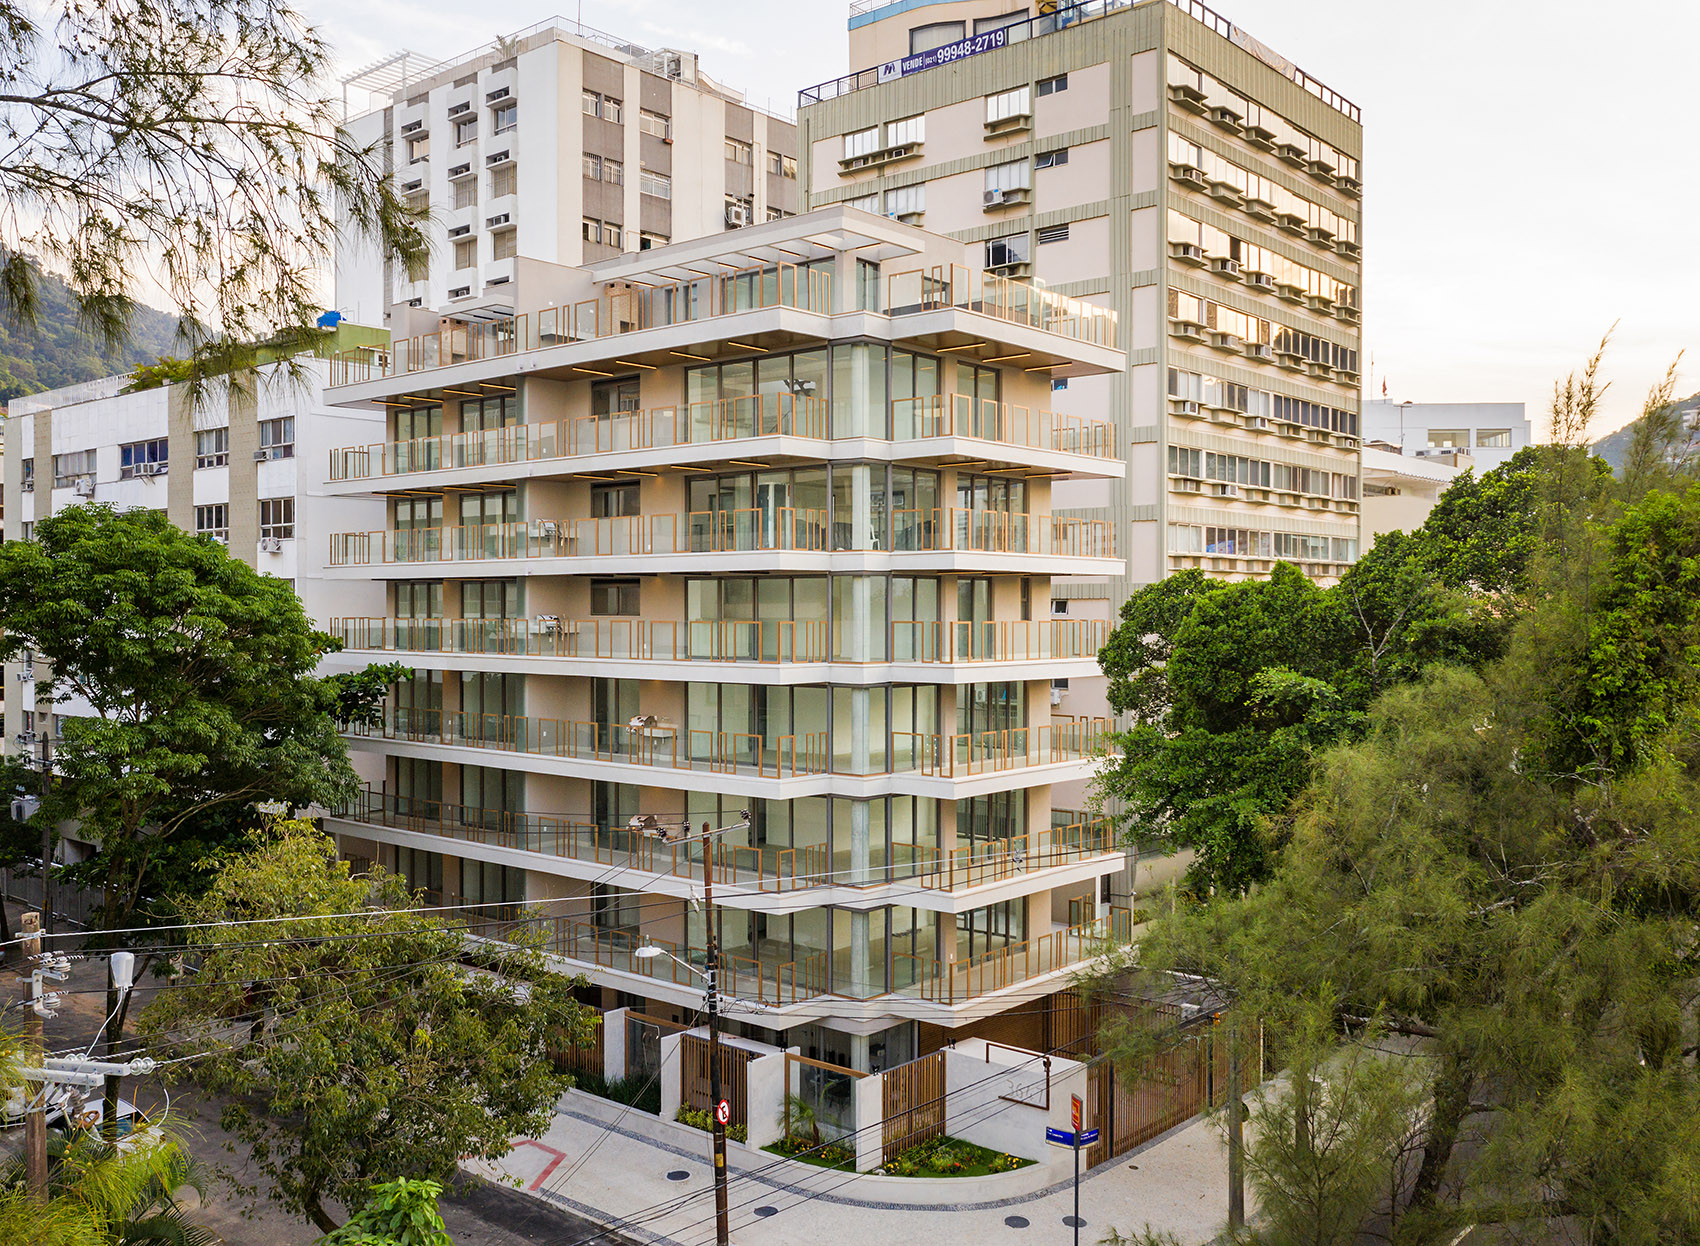 Borges 3647公寓楼，巴西/可以看到基督神像与泻湖景观的公寓楼-67